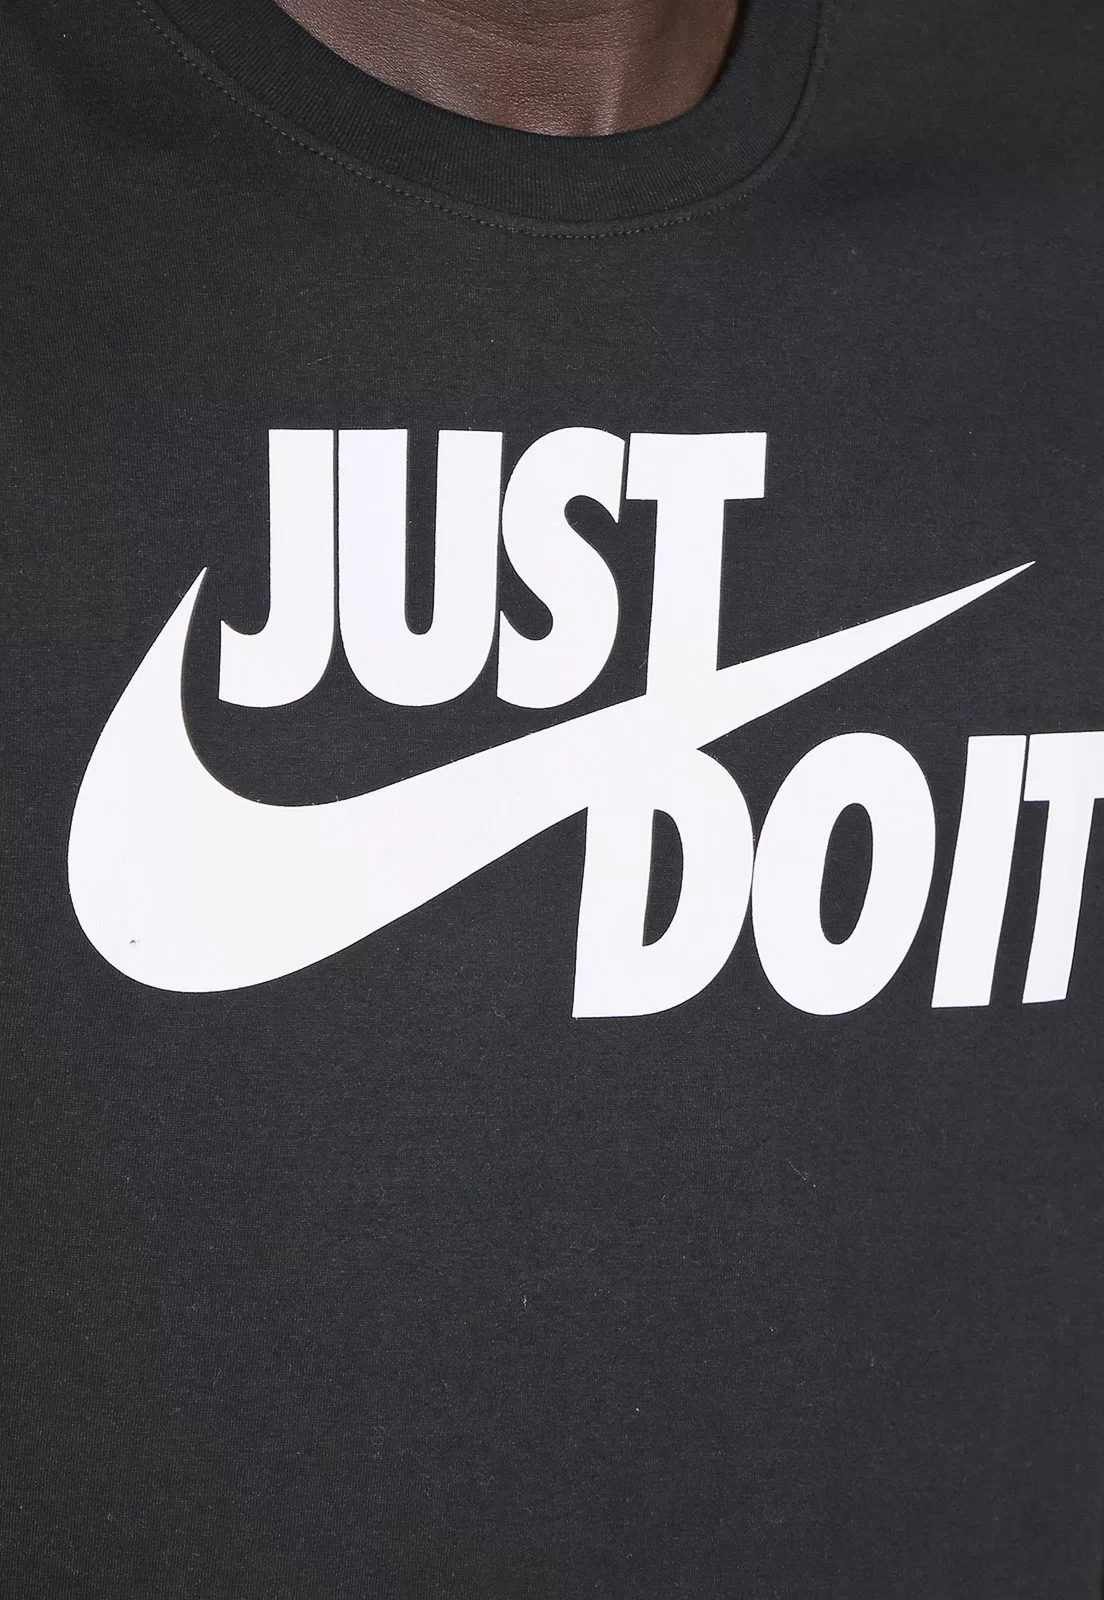 Camiseta Nike NSW Tee Just do It – Preta